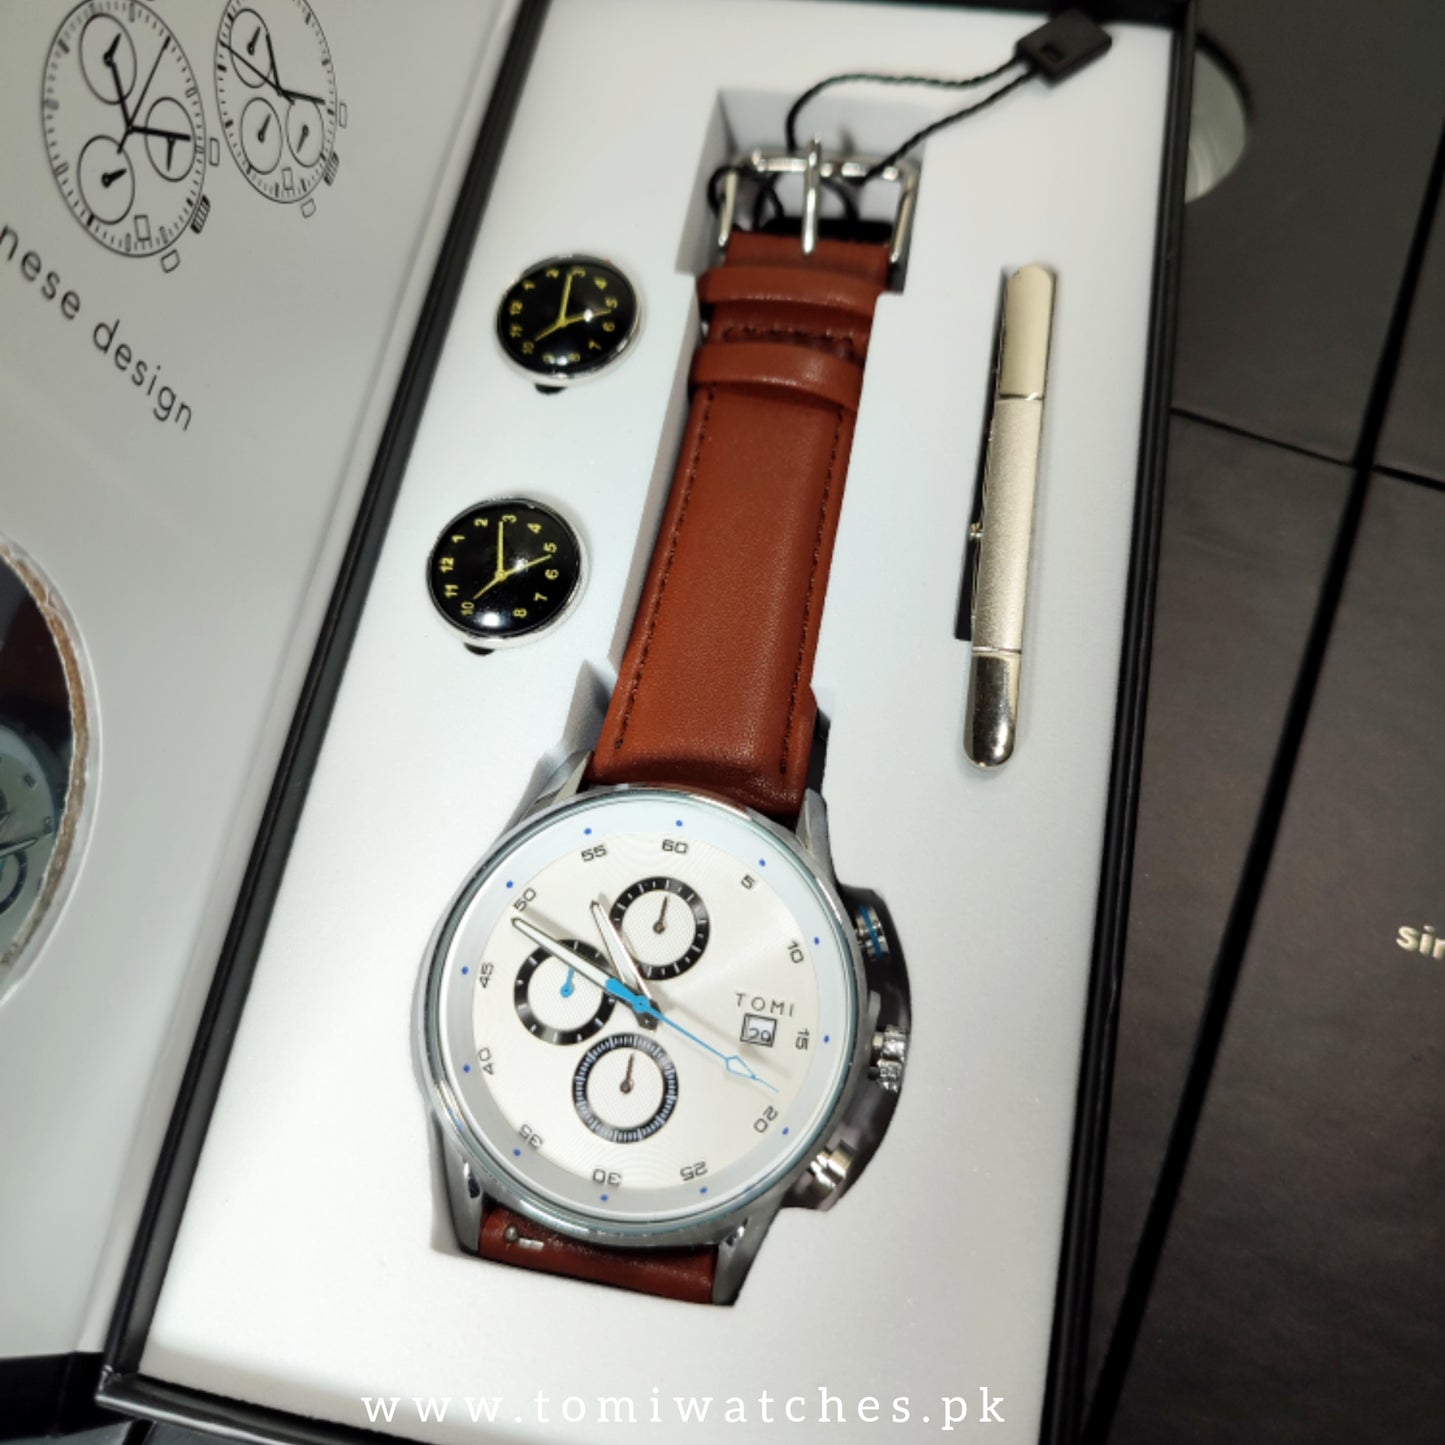 TOMI T-601 Luxury Business Chronograph Watch Tie Pin Cufflinks